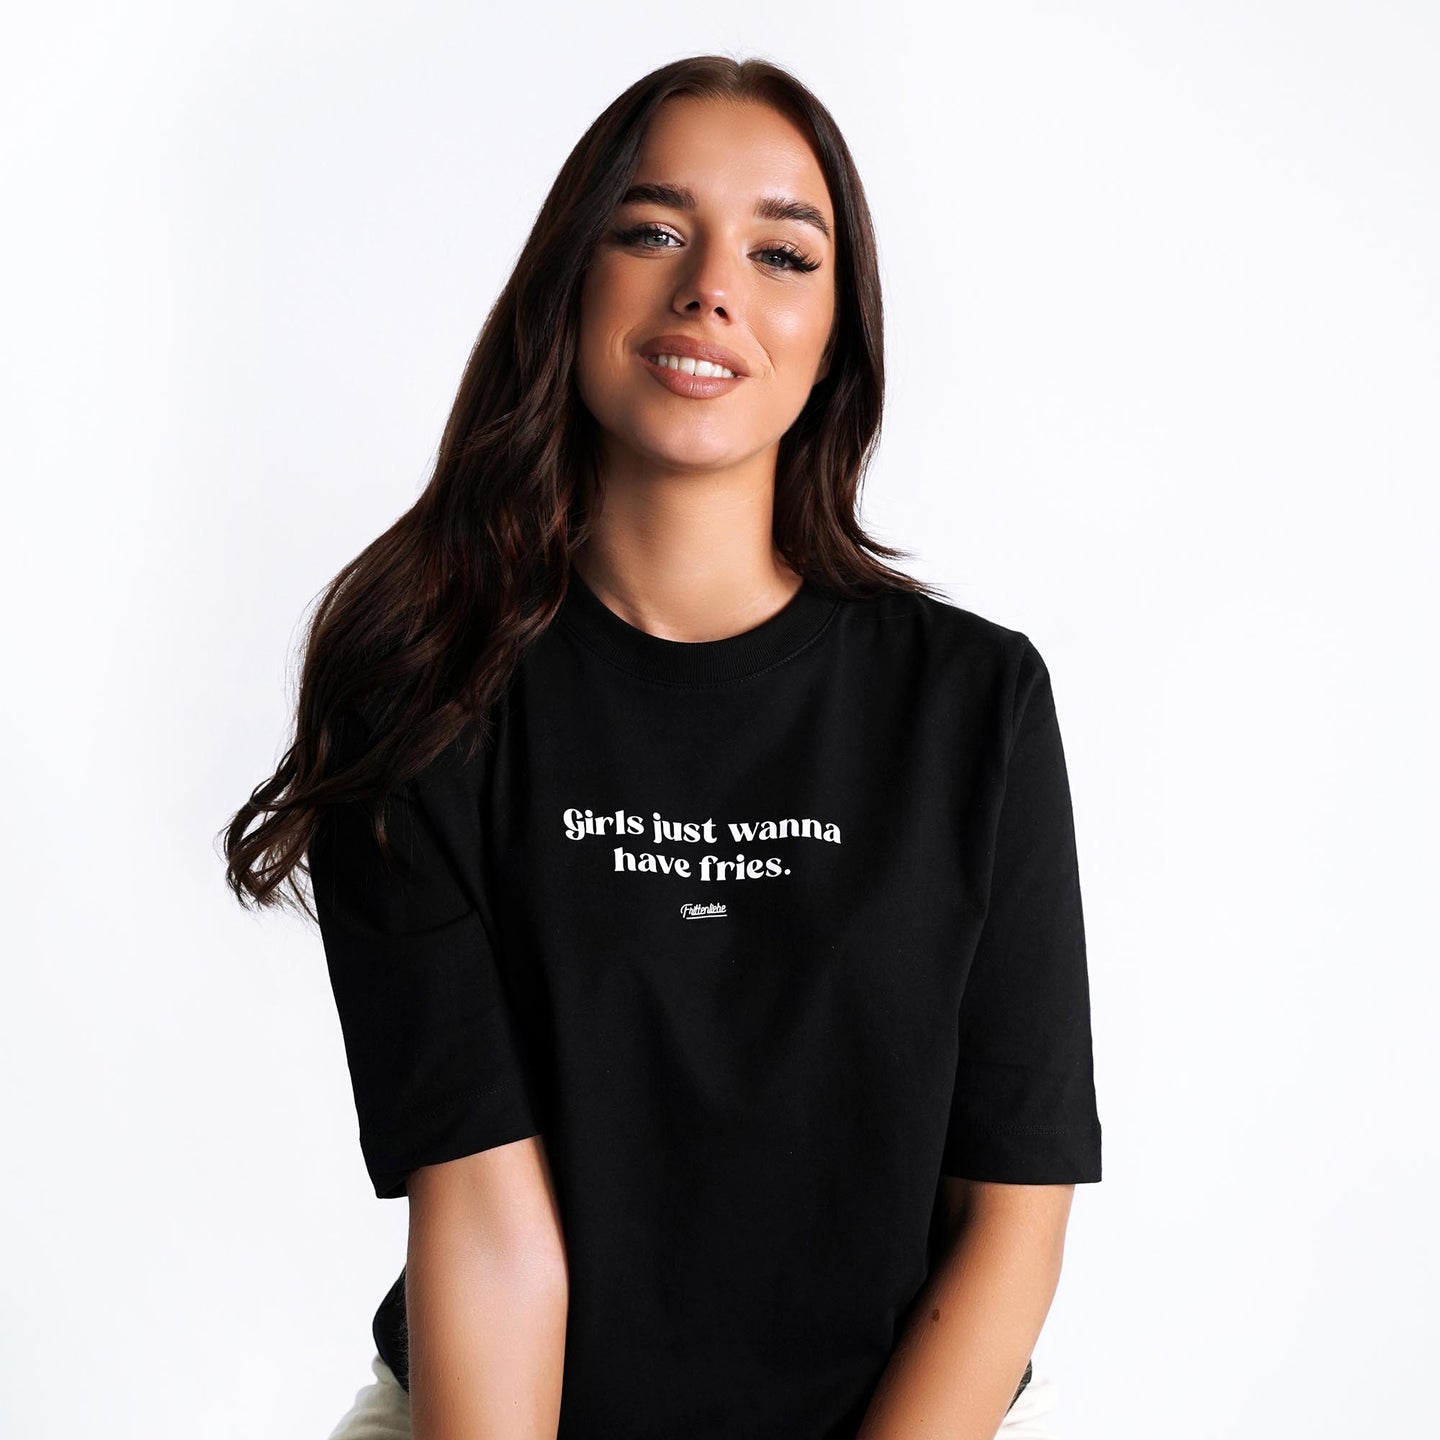 Junge Frau in schwarzem T-Shirt